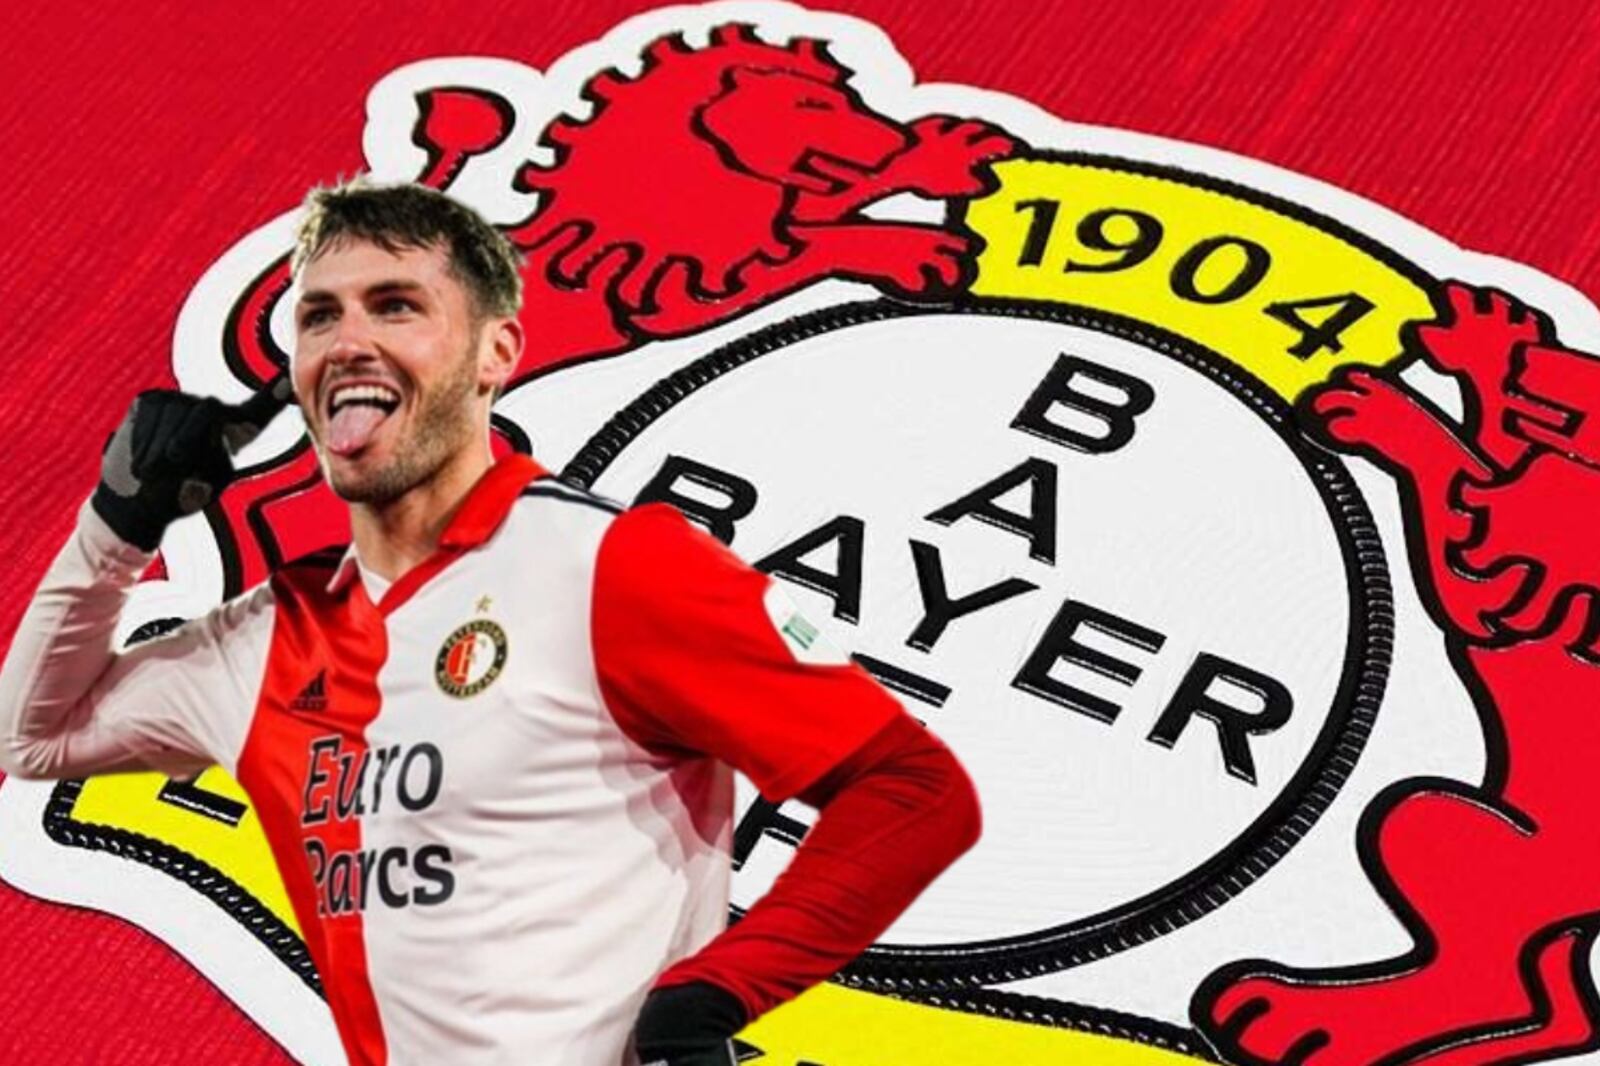 Tiembla Europa, Santi Giménez recibe buenas noticias gracias al Bayer Leverkusen